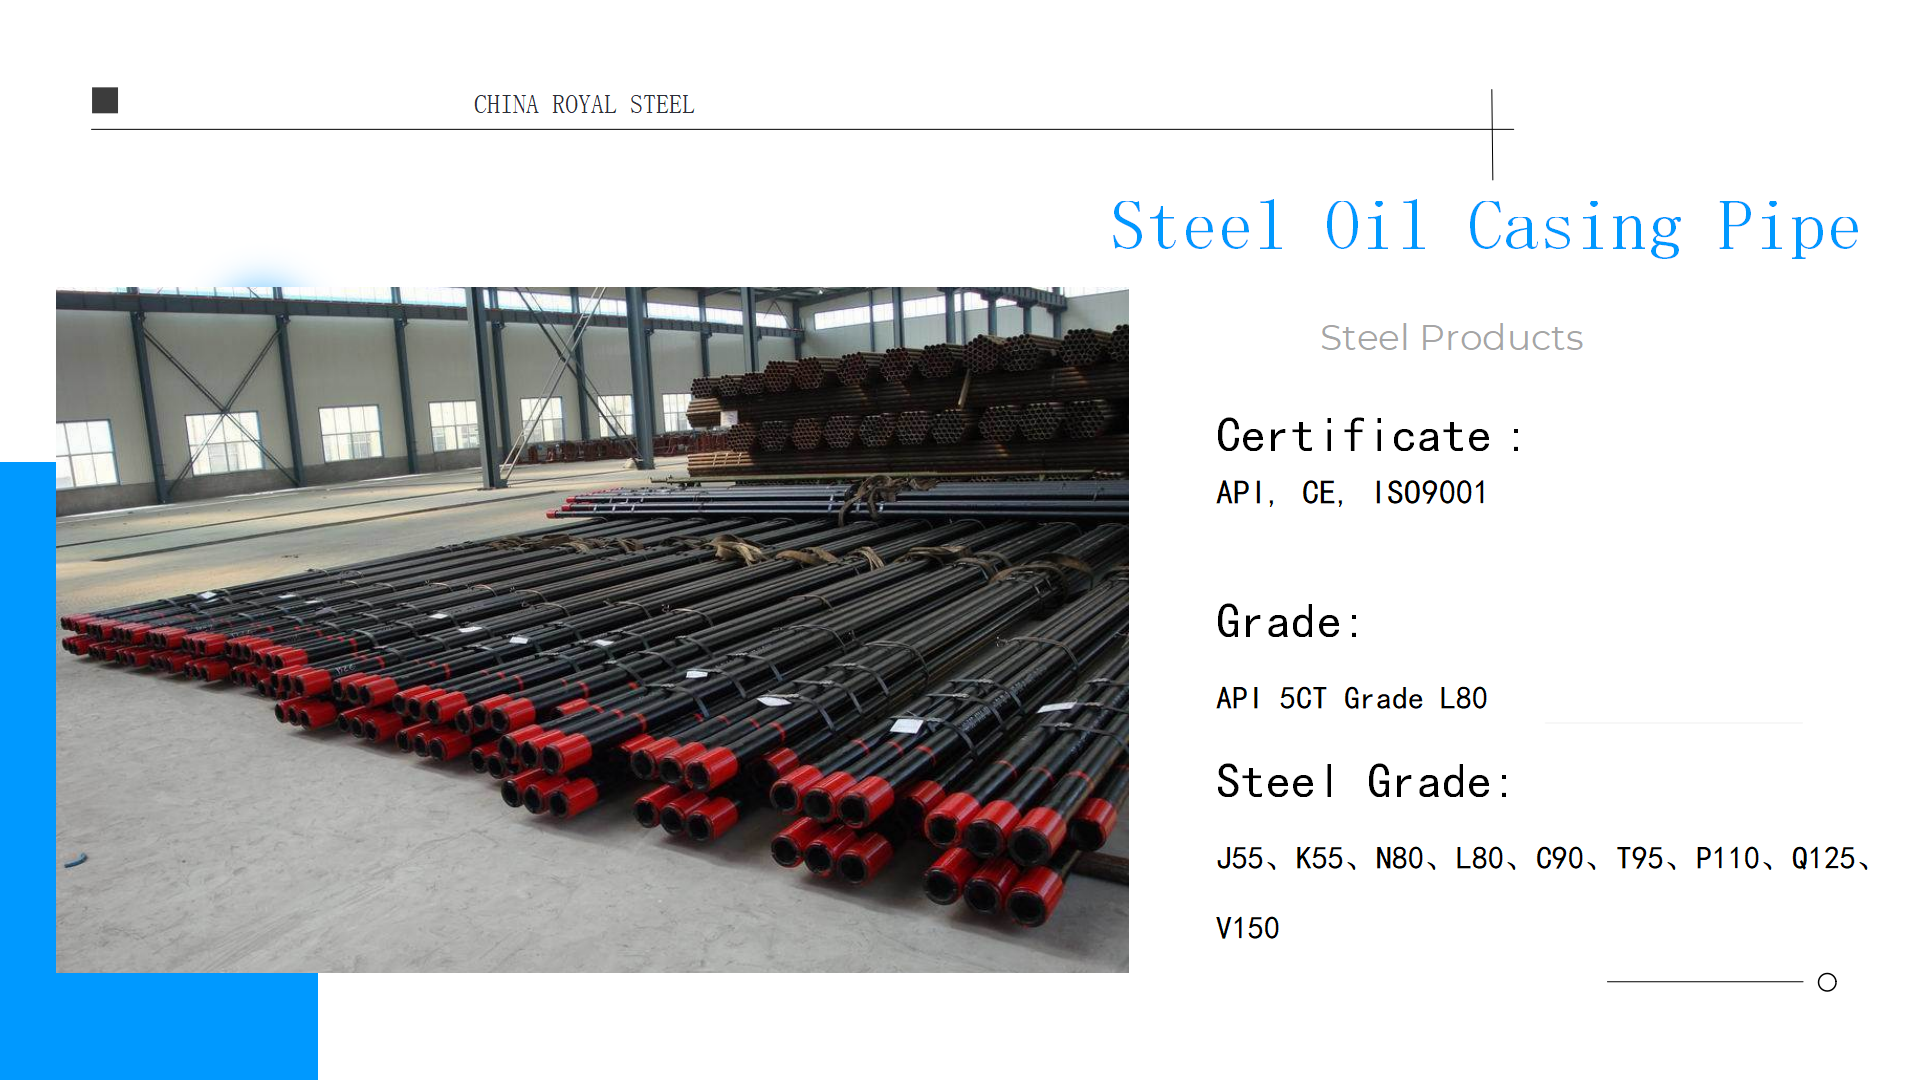 Steel Oil Casing Pipe (1)